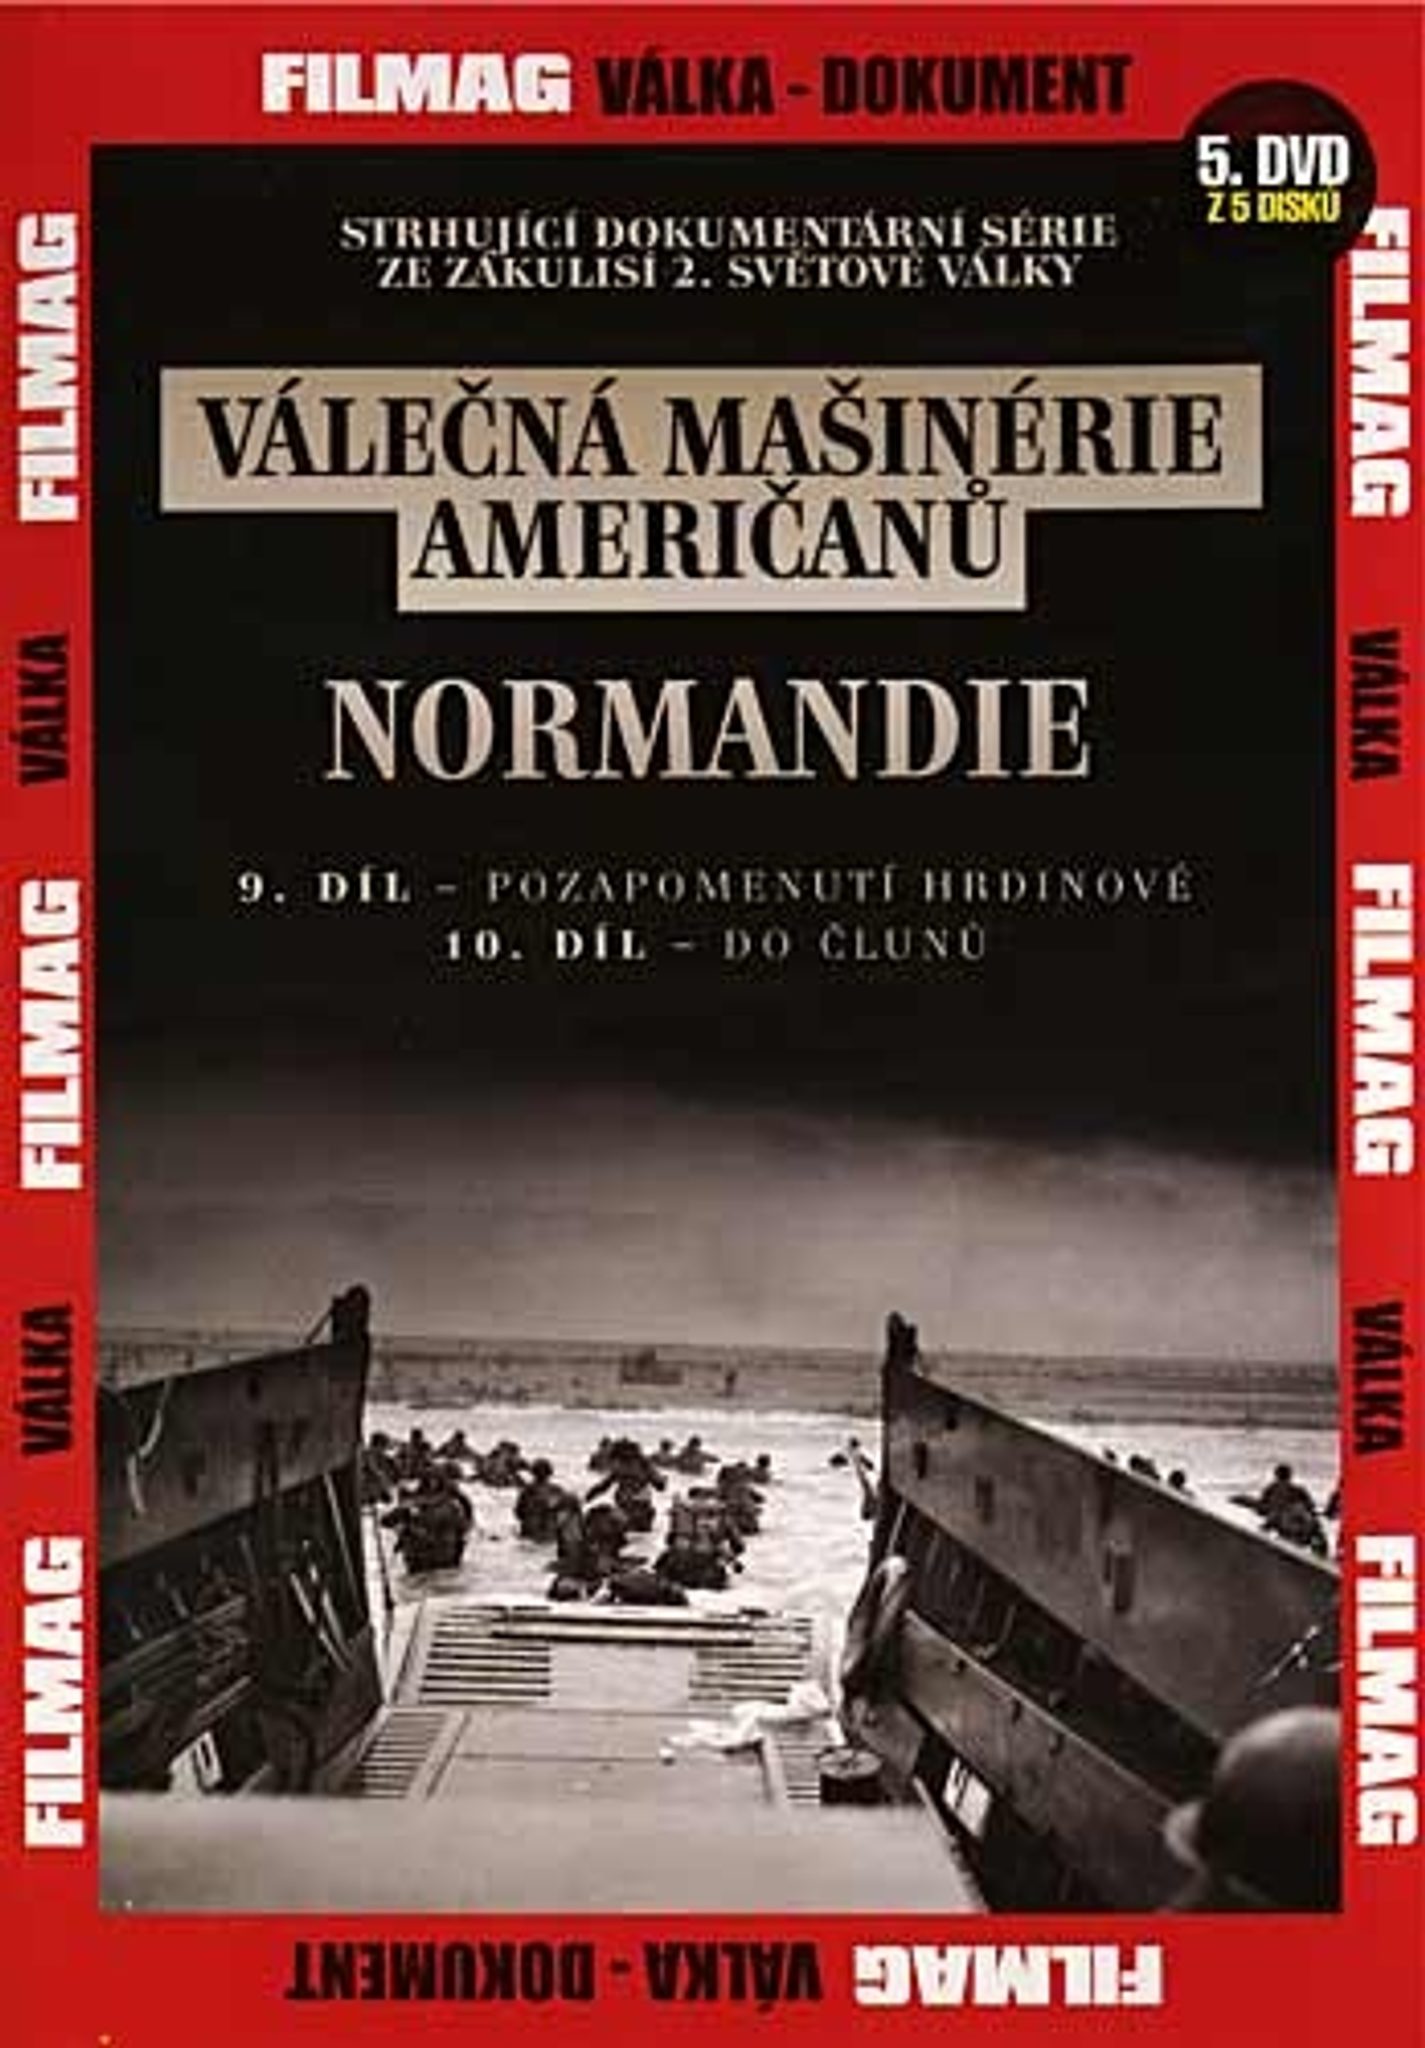 DVD Vlen mainrie amerian - Normandie